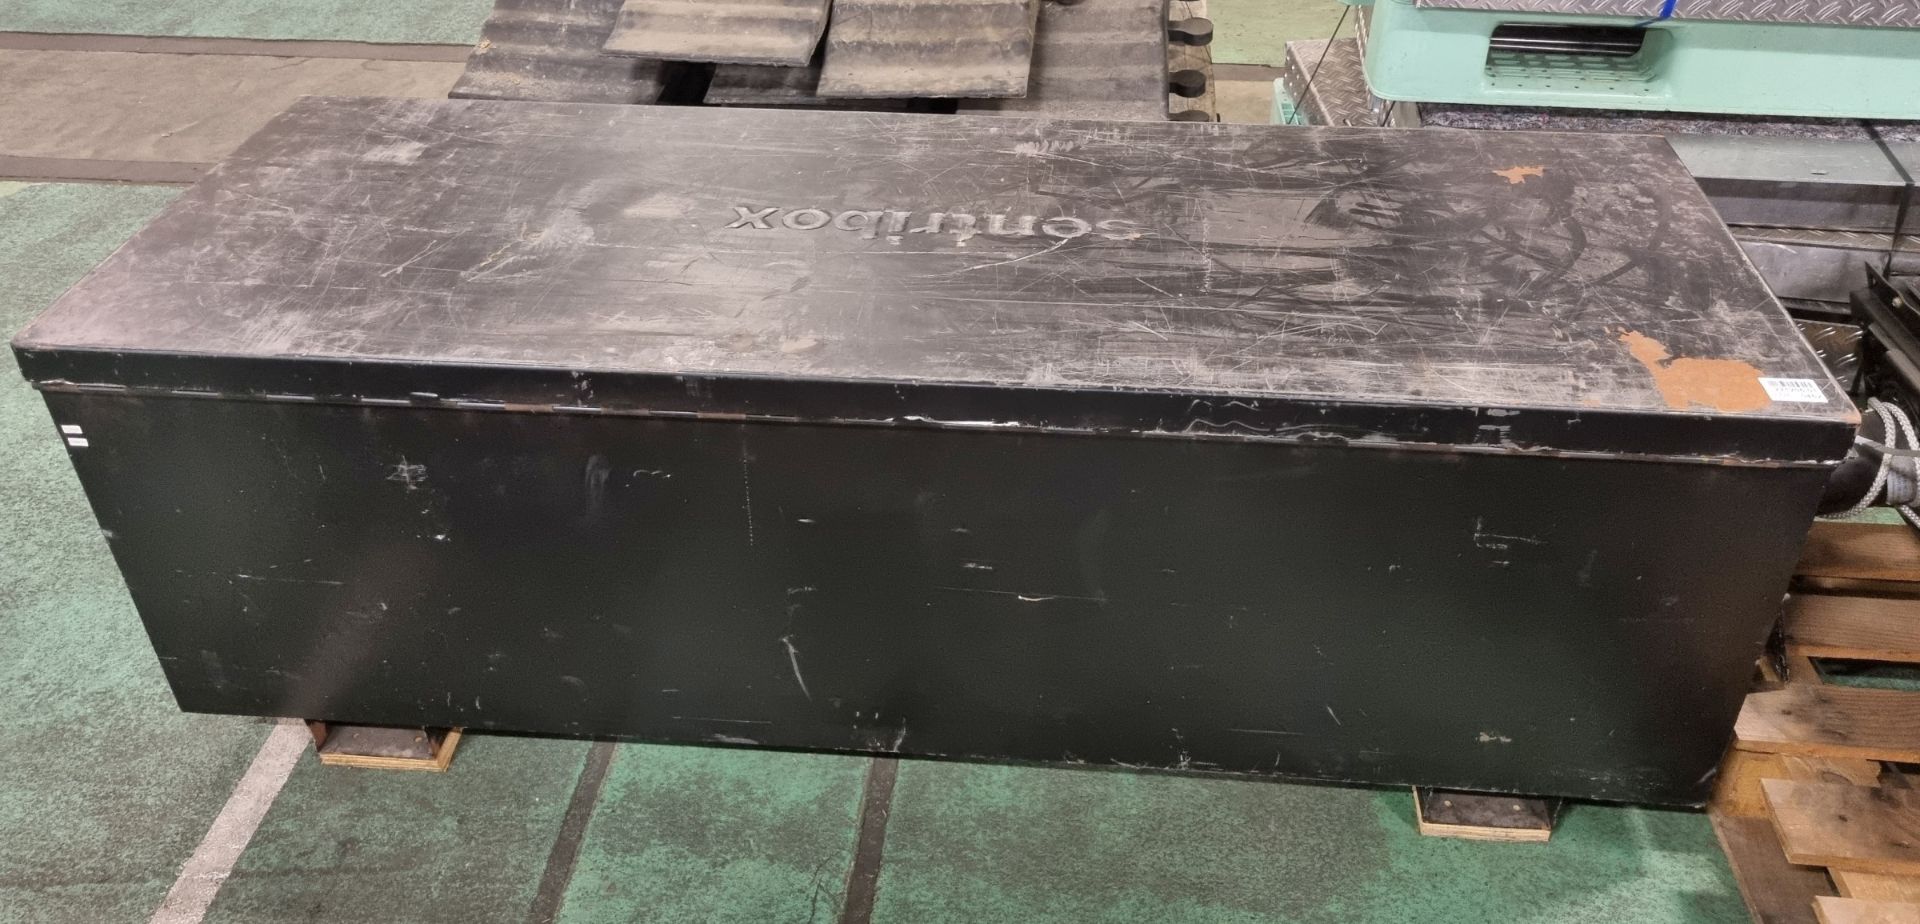 Sentribox steel storage container (no gas struts) - dimensions: 185x63x65cm